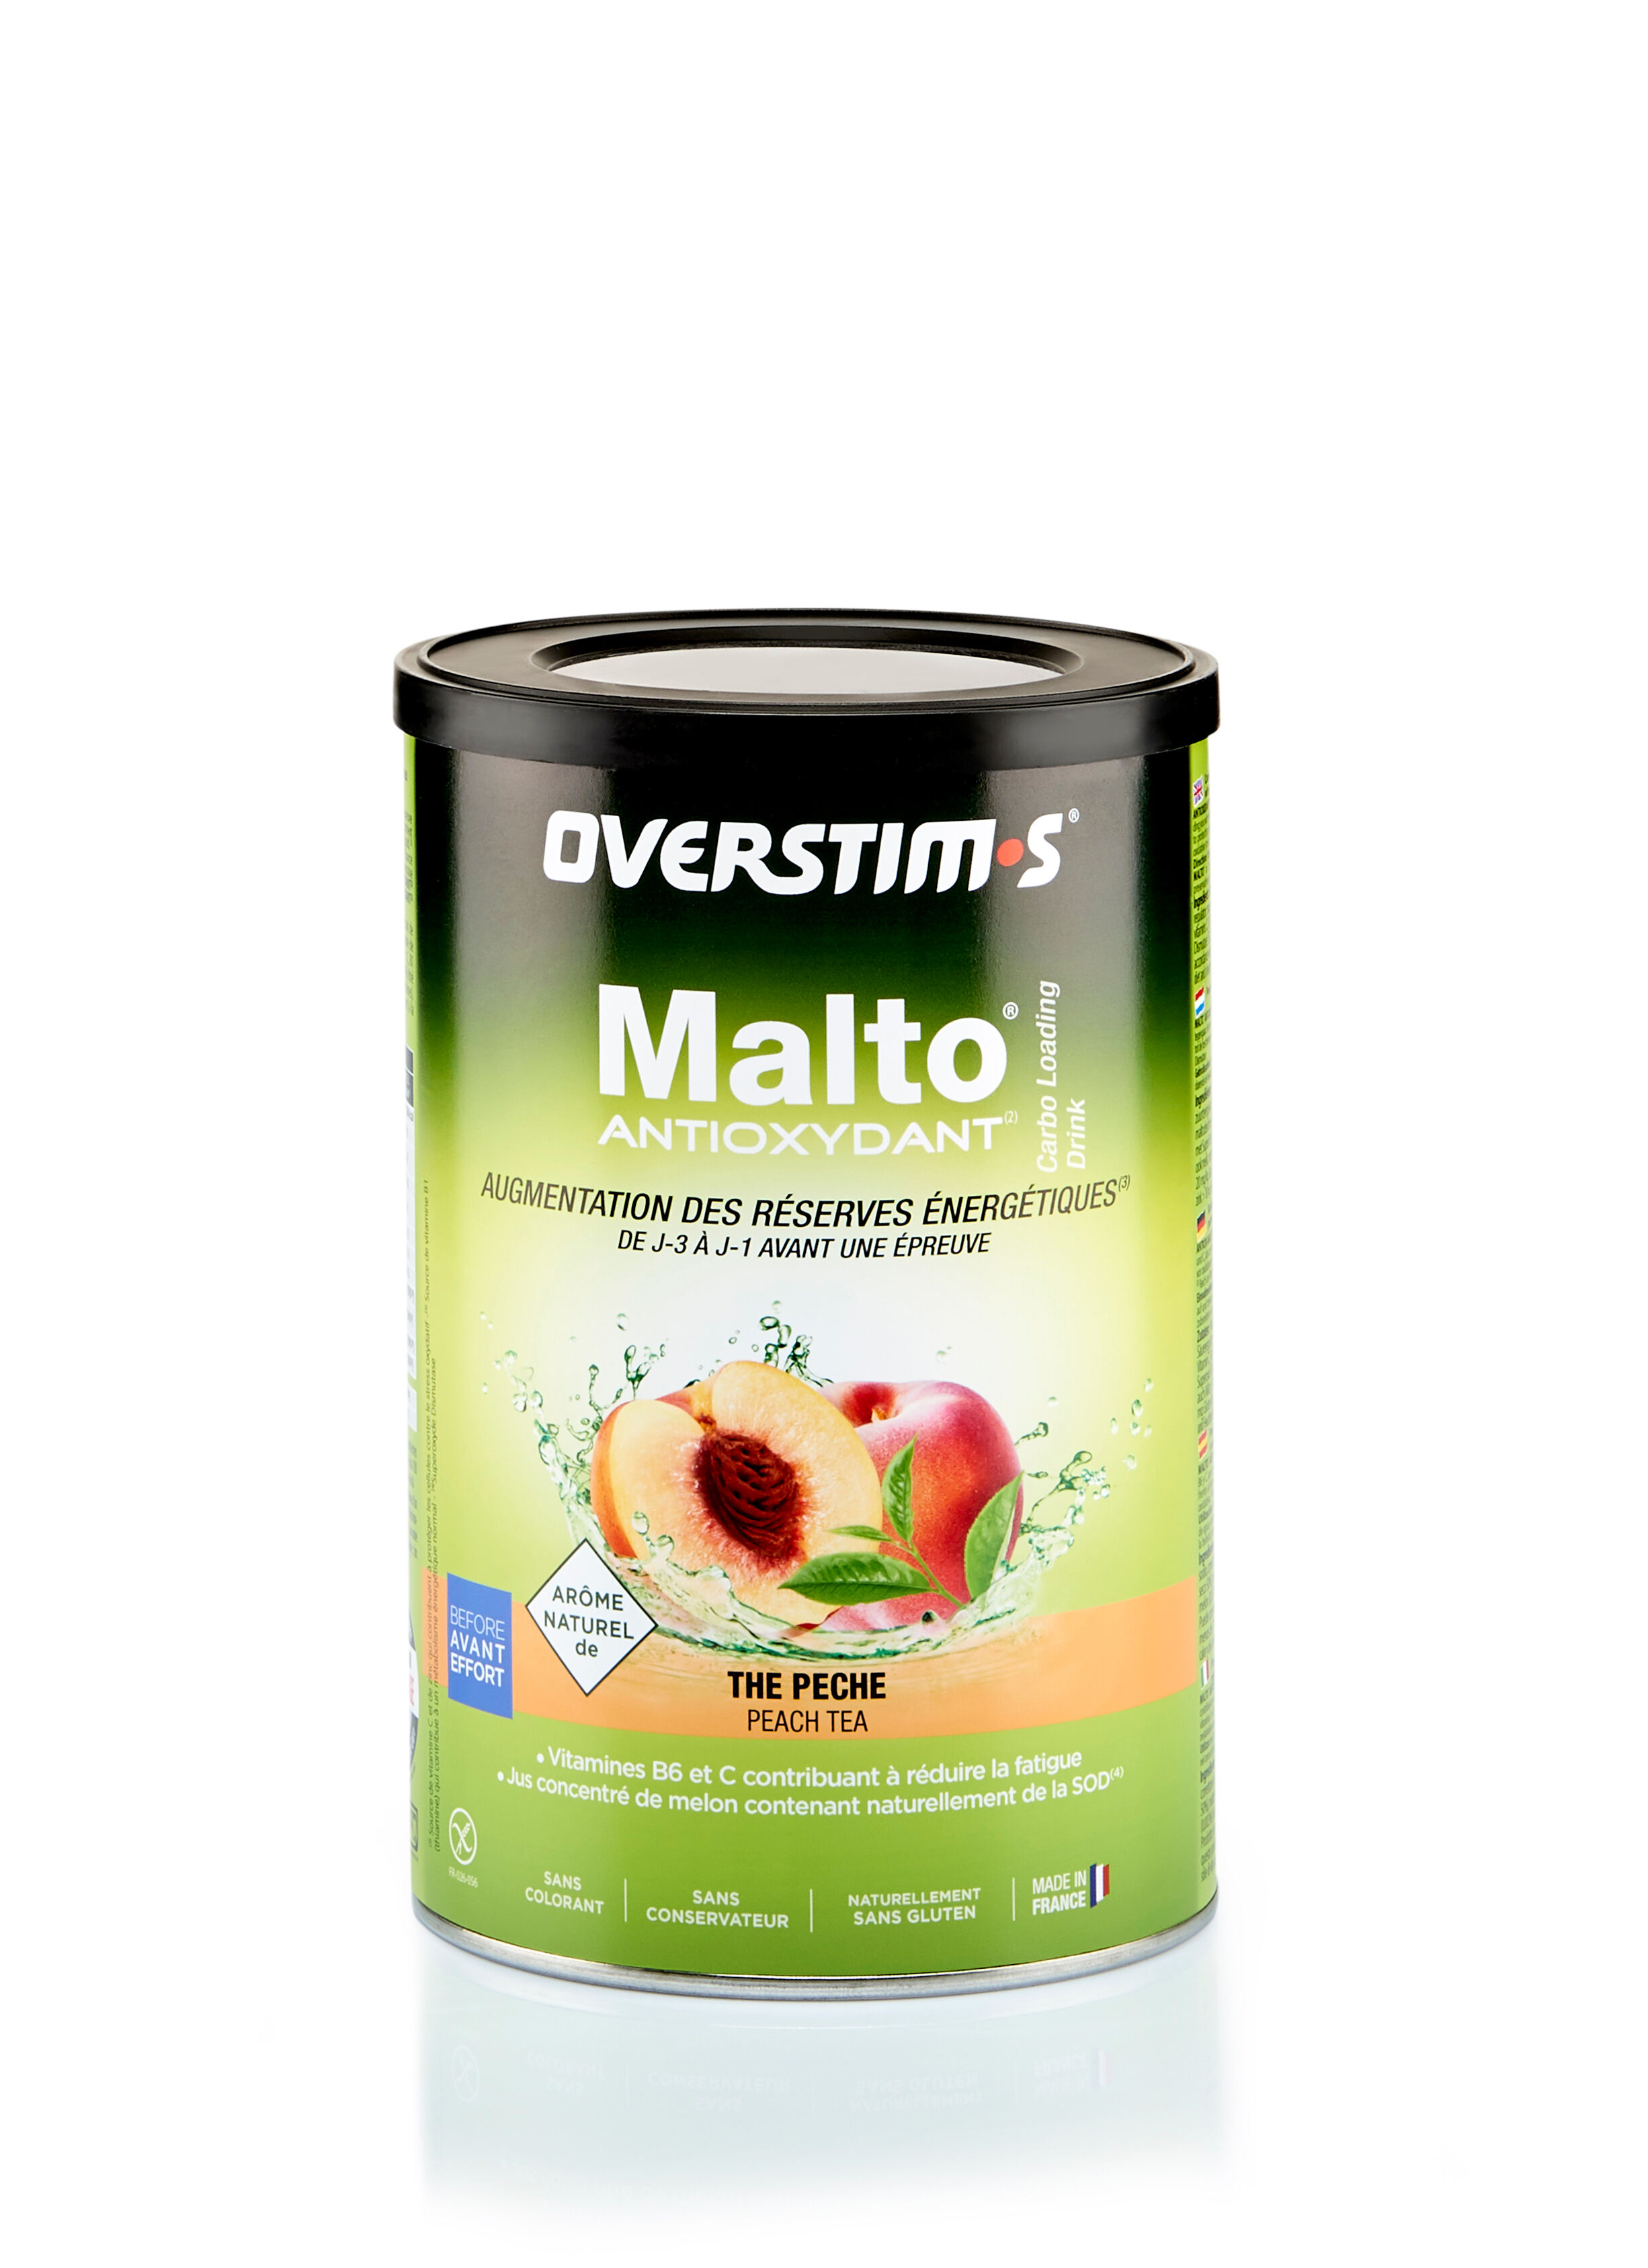 Overstim.s Antioxidant Malto